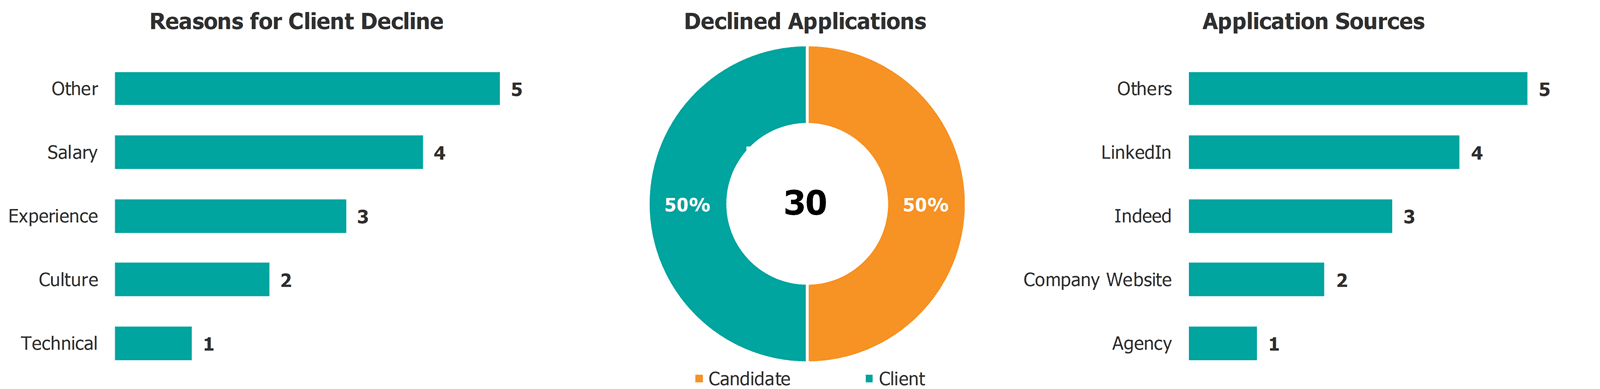 Recruiting Metrics Dashboard Declined Applications